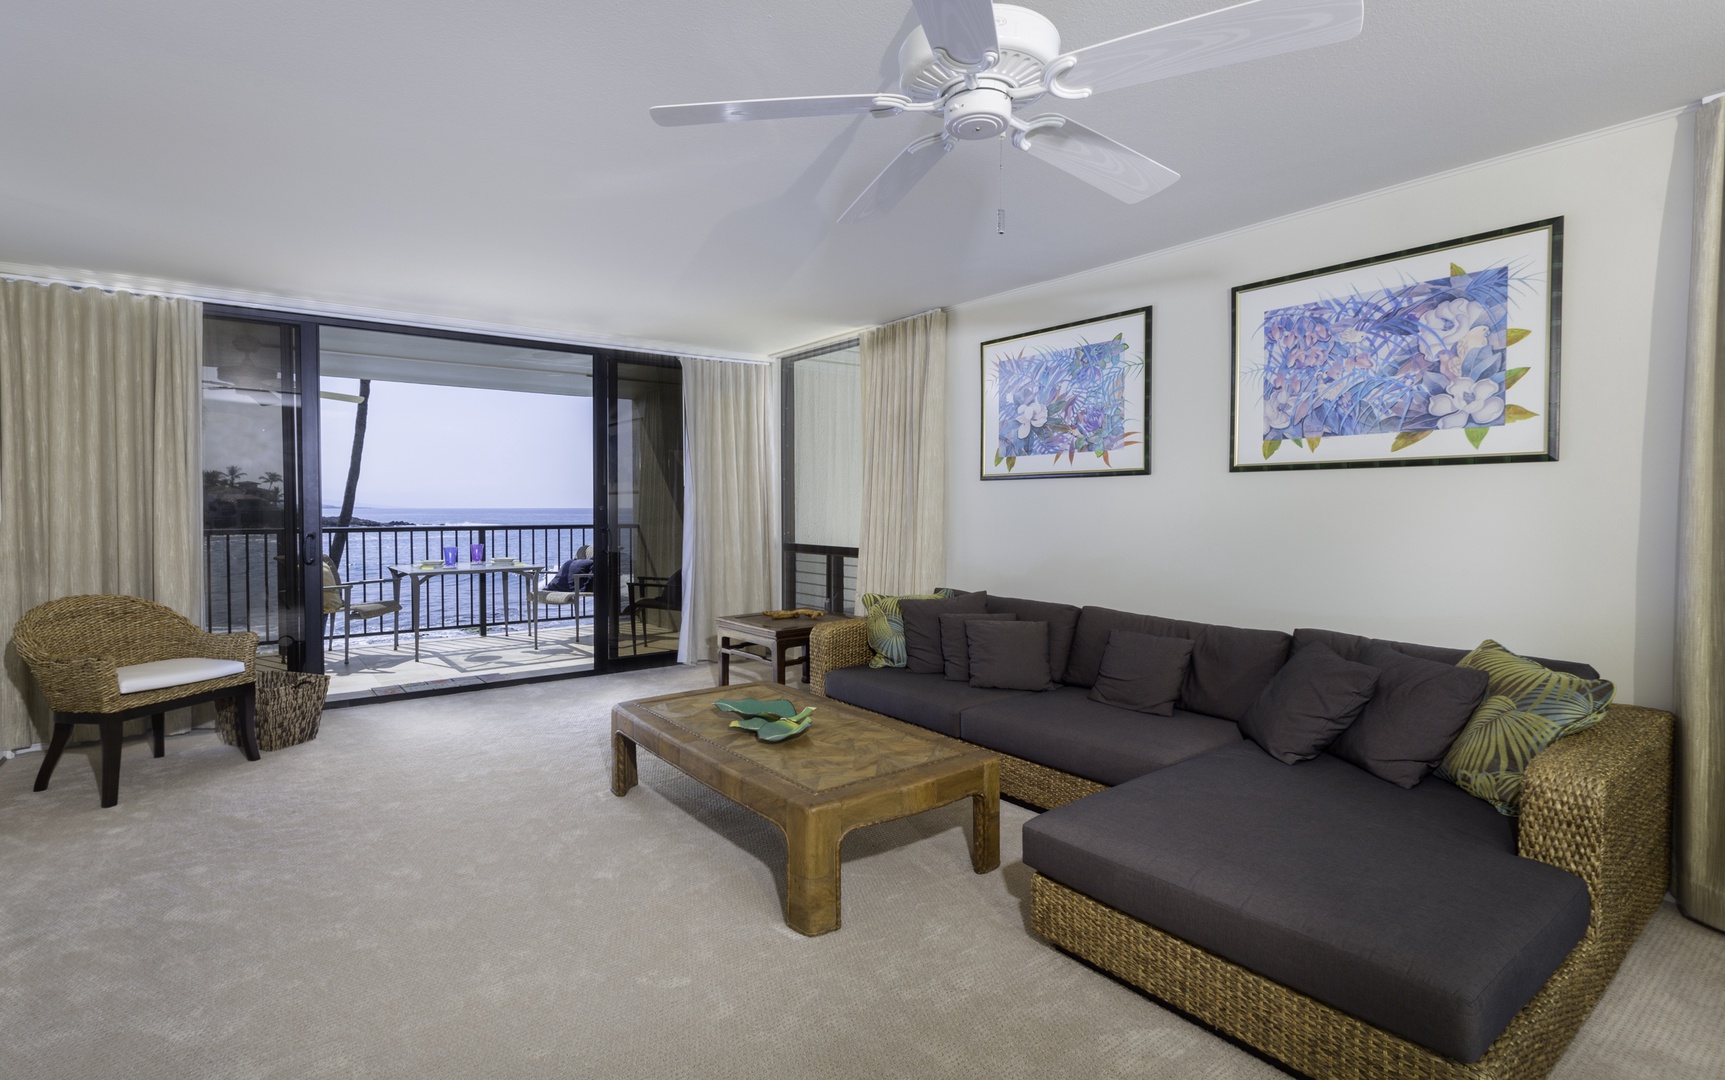 Kailua Kona Vacation Rentals, Kona By The Sea (Big Island) - Spacious, open living room with a view.